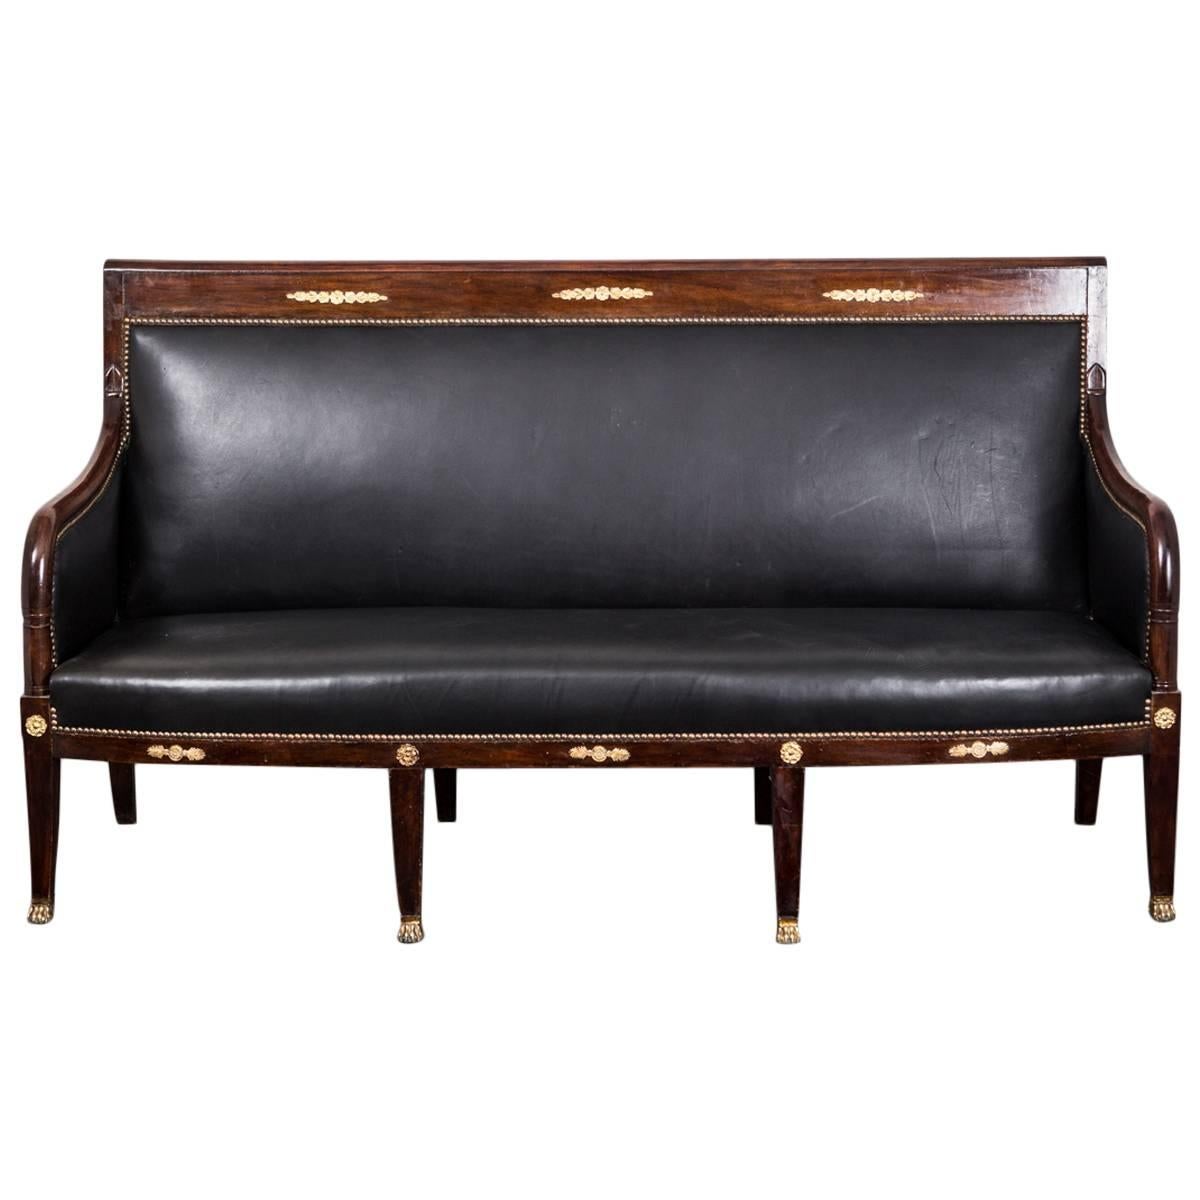 Sofa Bench French Empire Period 1790-1810 Mahogany Black Leather France